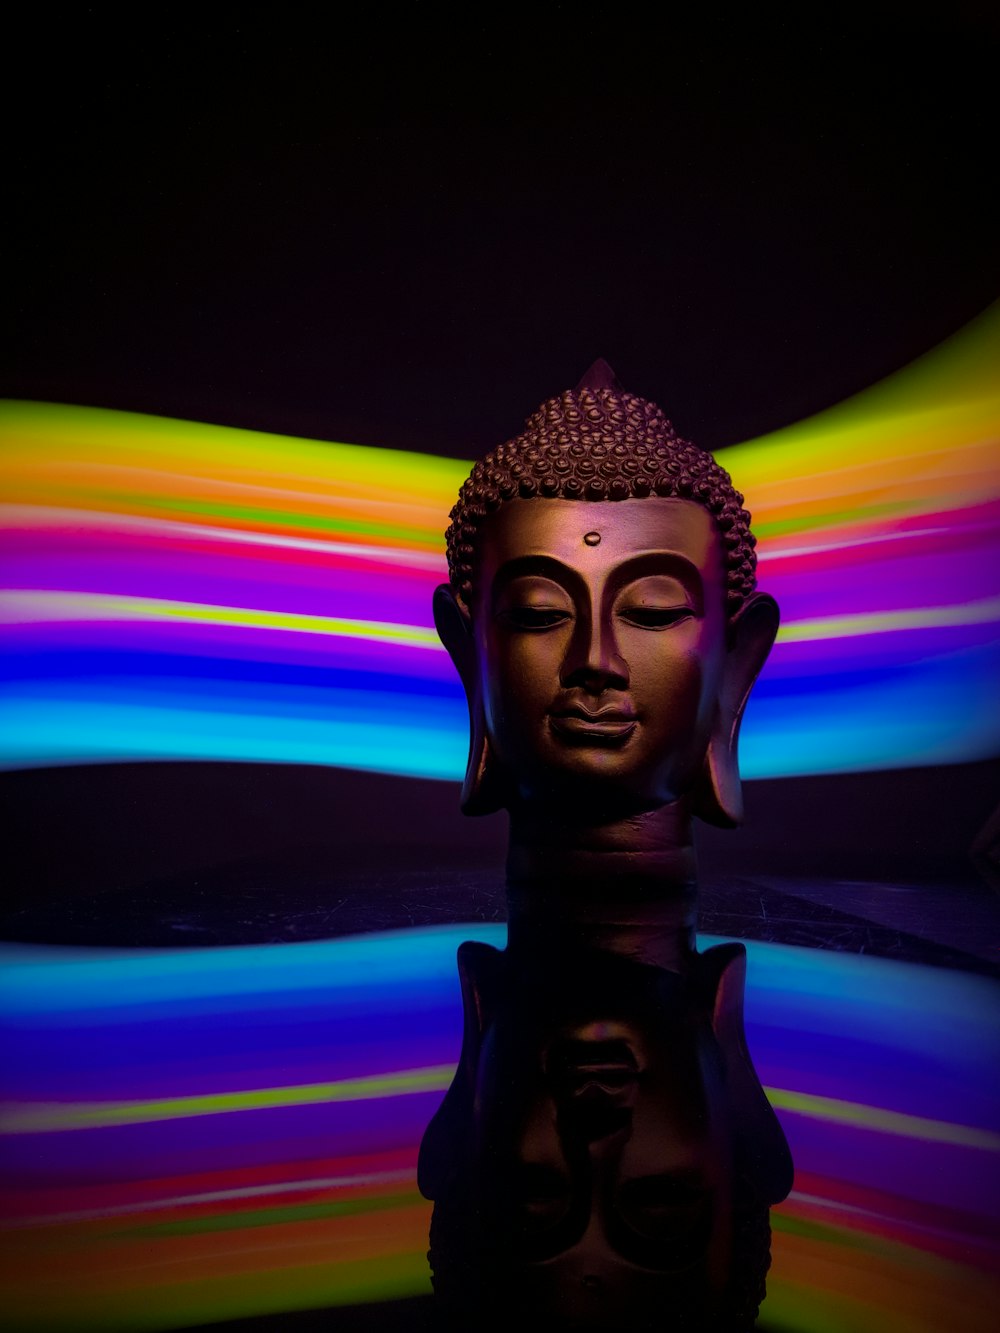 gold buddha statue with rainbow background